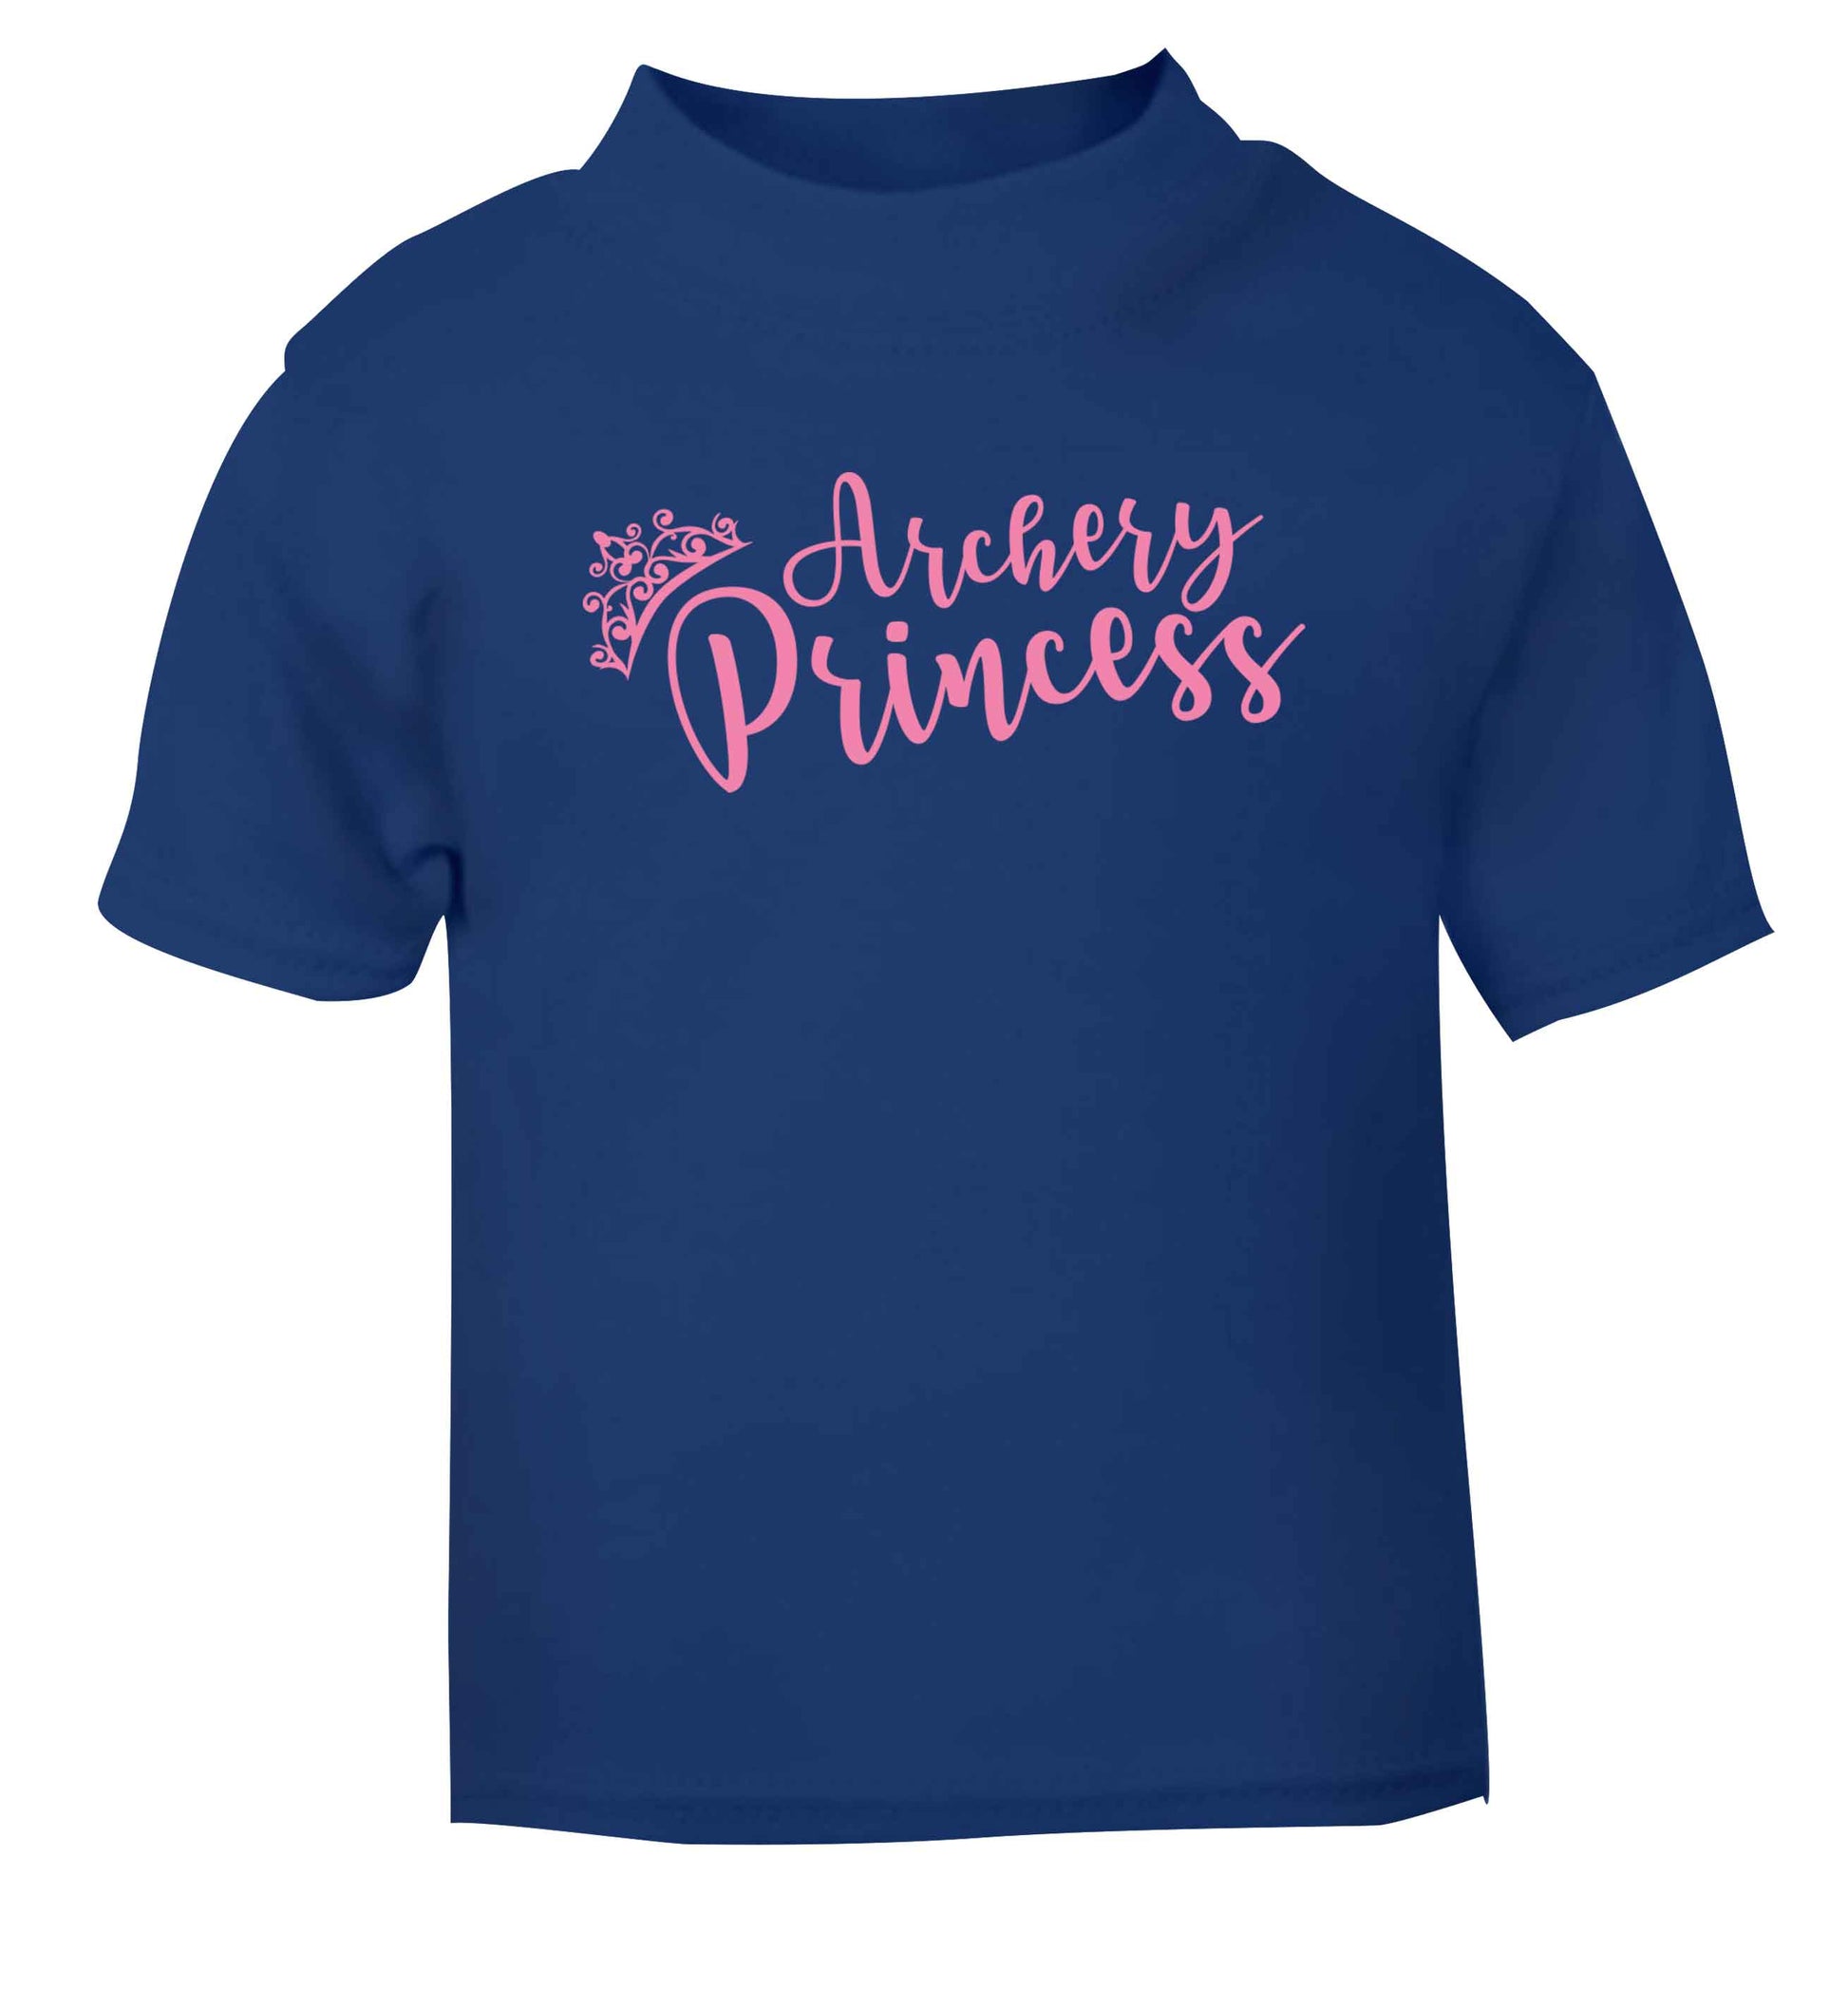 Archery princess blue Baby Toddler Tshirt 2 Years